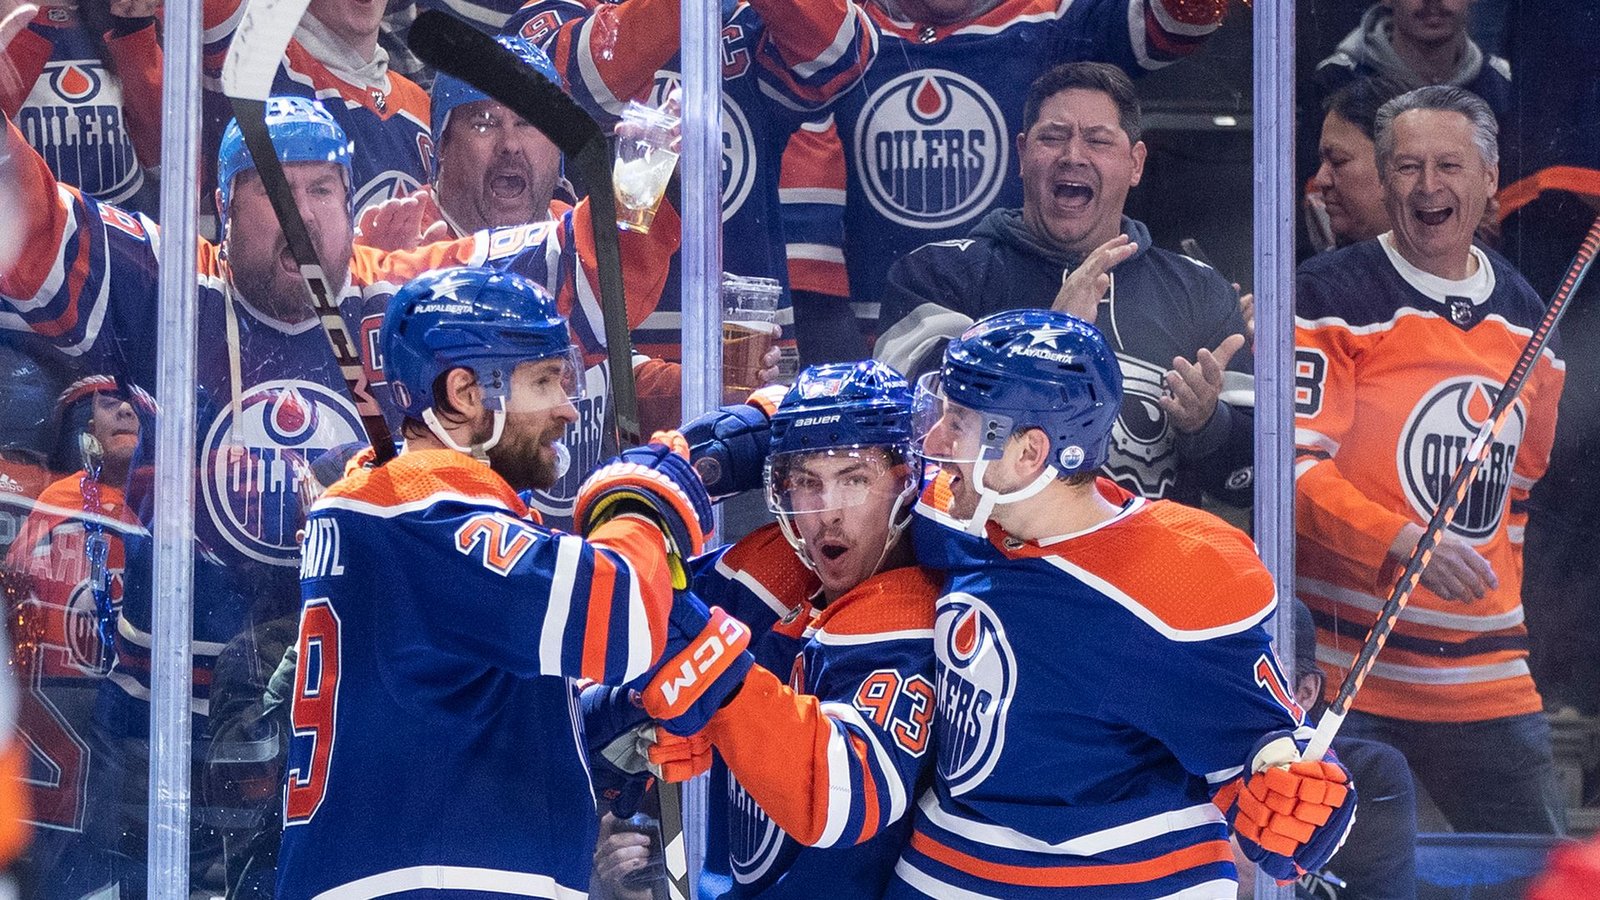 Leon Draisaitl (l) erzielte zwei Treffer für die Edmonton Oilers.Foto: Jason Franson/The Canadian Press via AP/dpa